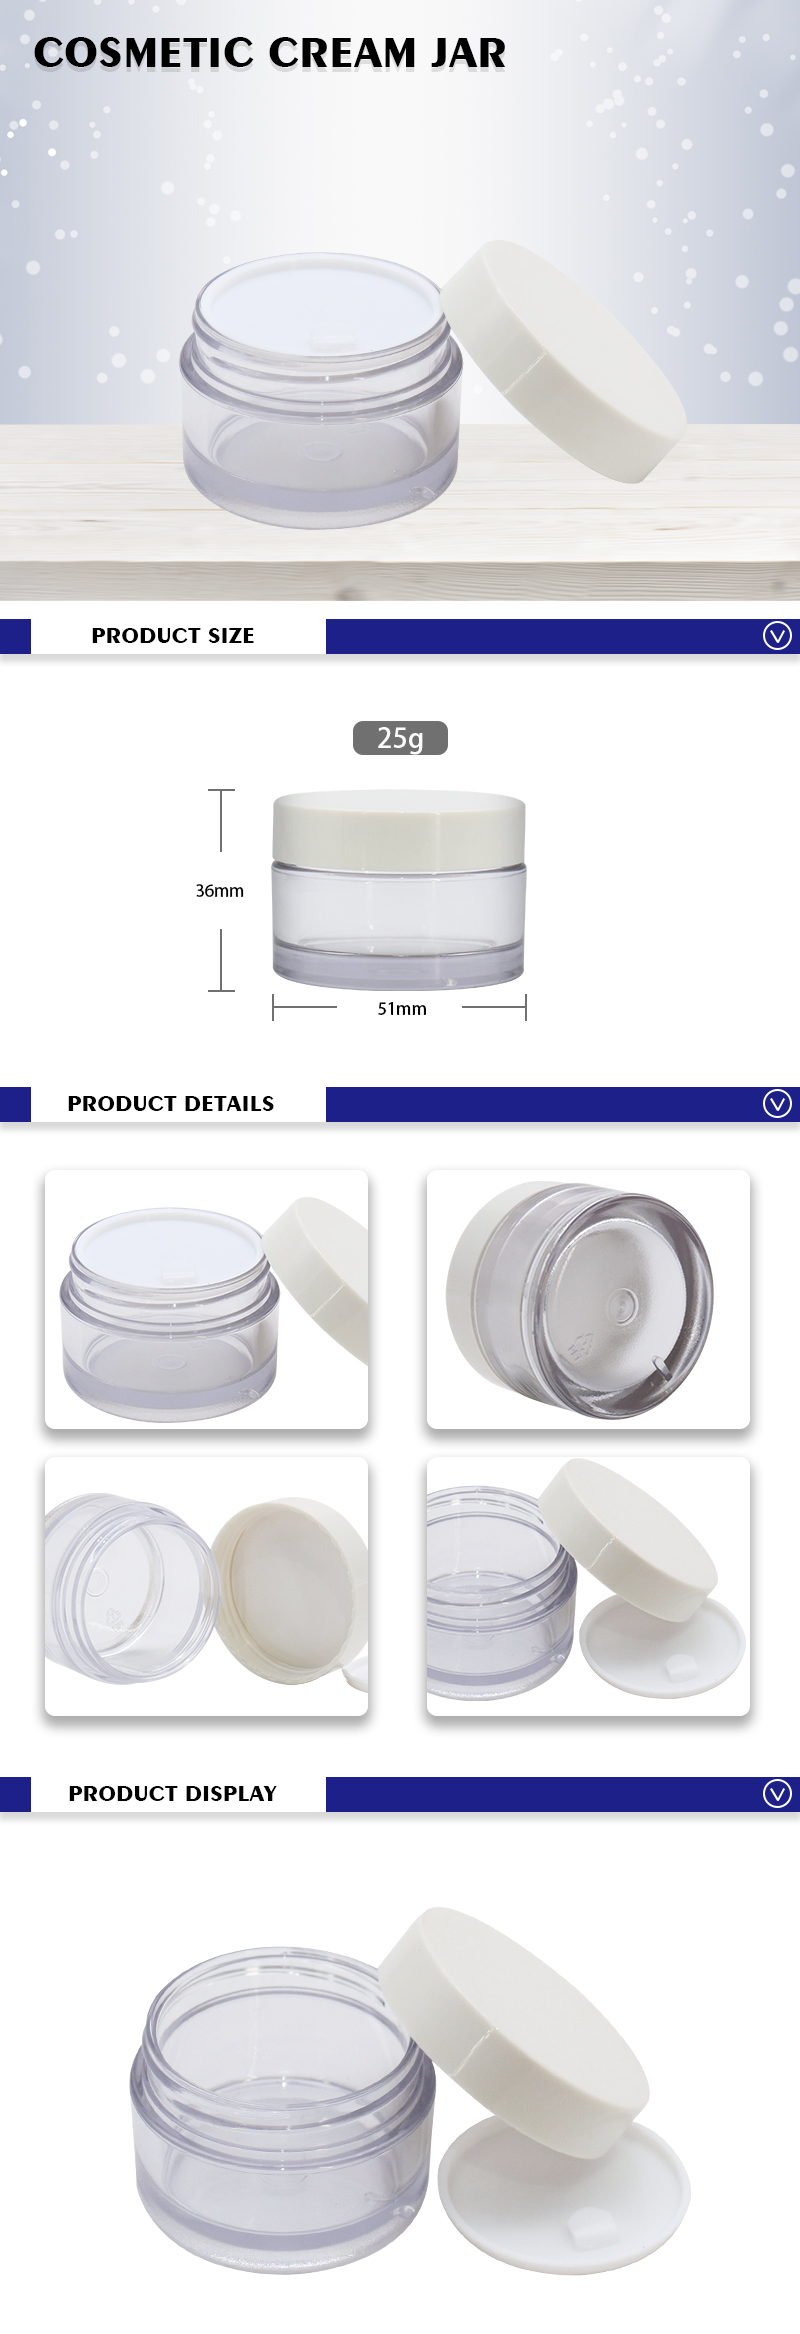 25g Cosmetic Cream Jar